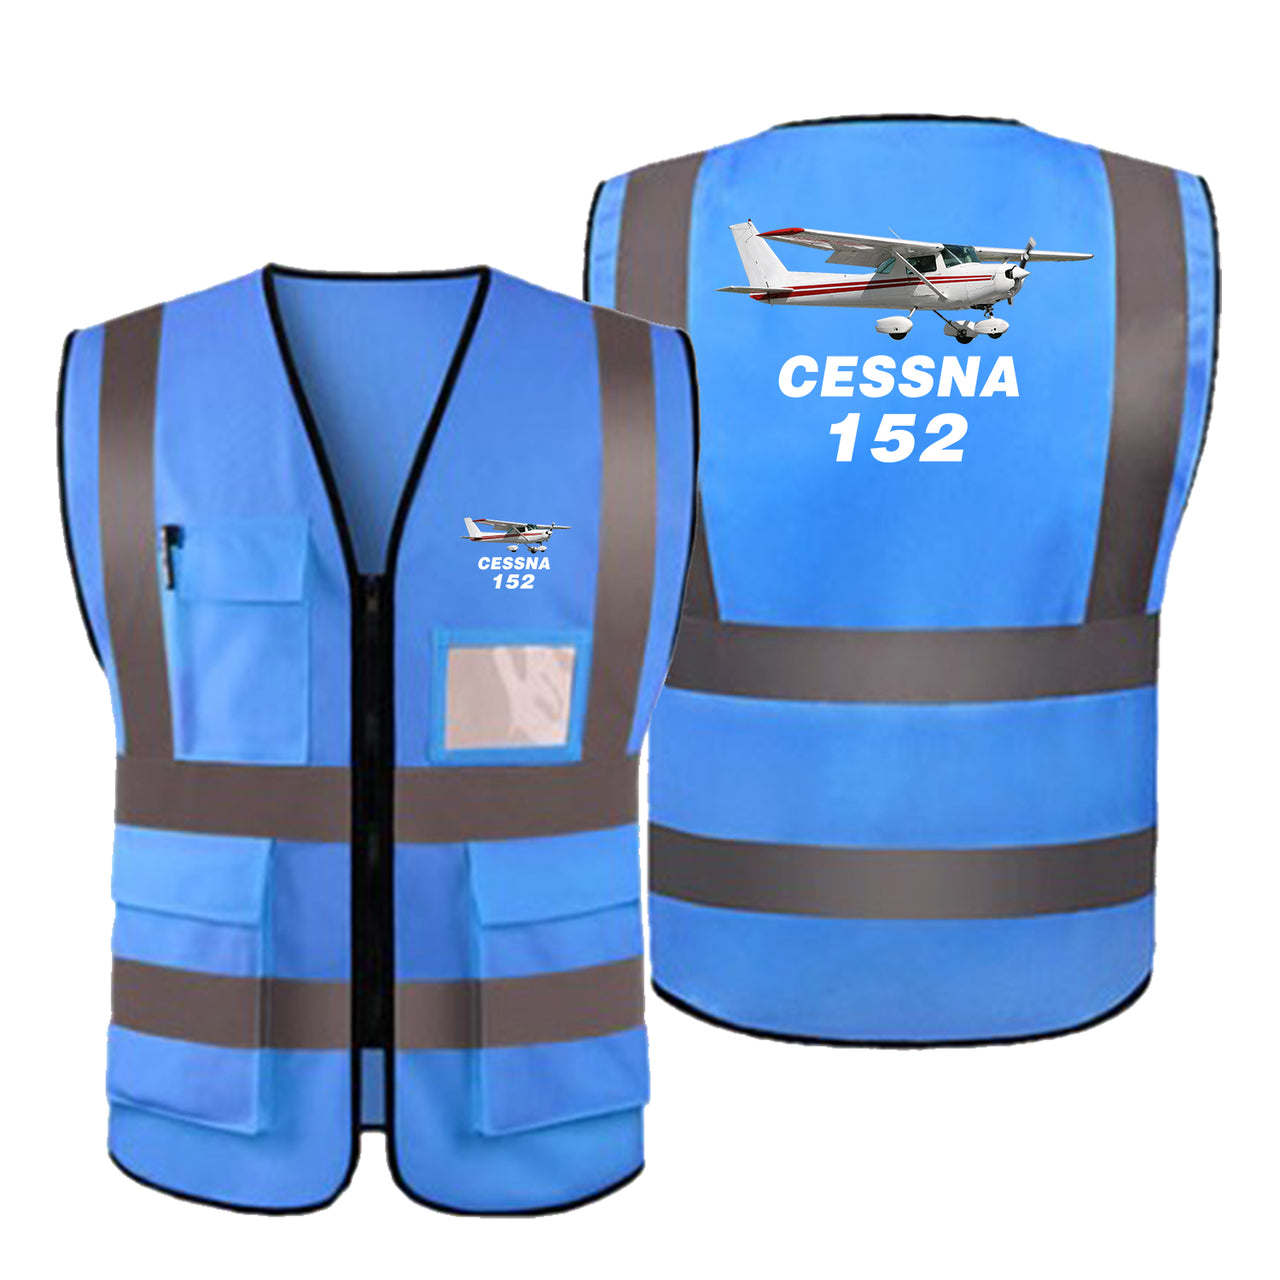 The Cessna 152 Designed Reflective Vests